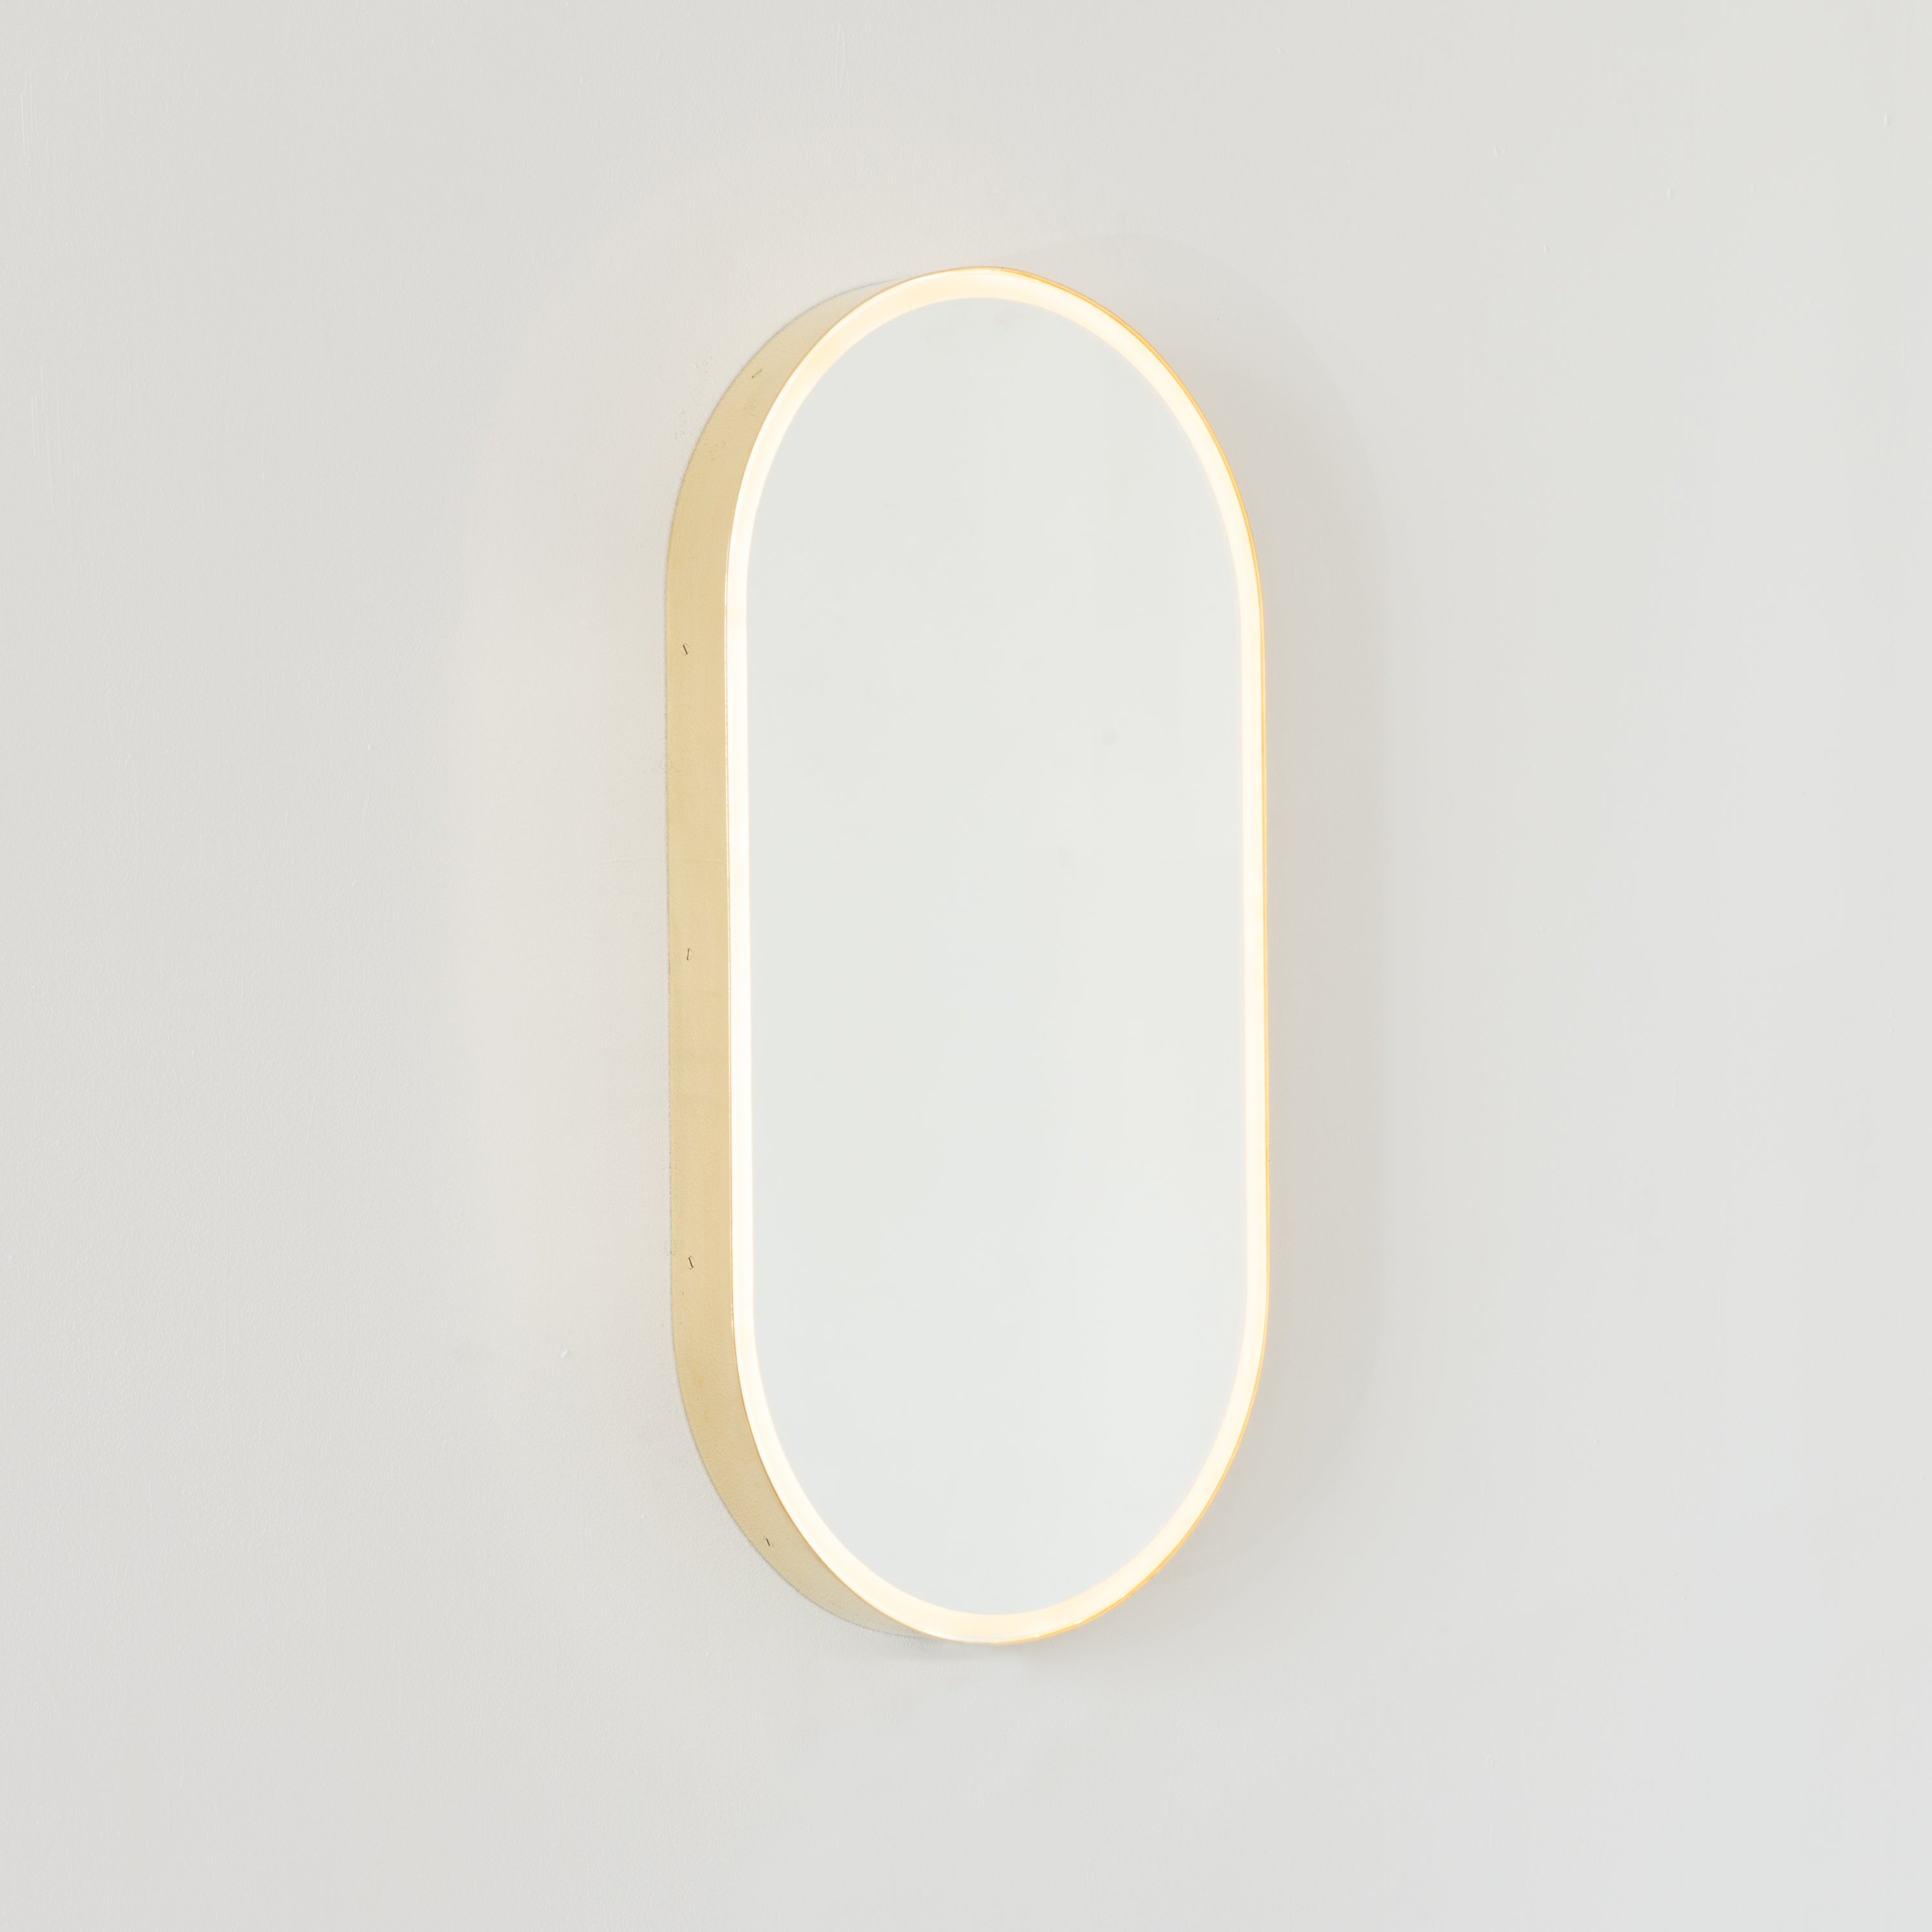 British Capsula Illuminated Capsule Shape Modern Mirror with Brass Frame, Medium For Sale